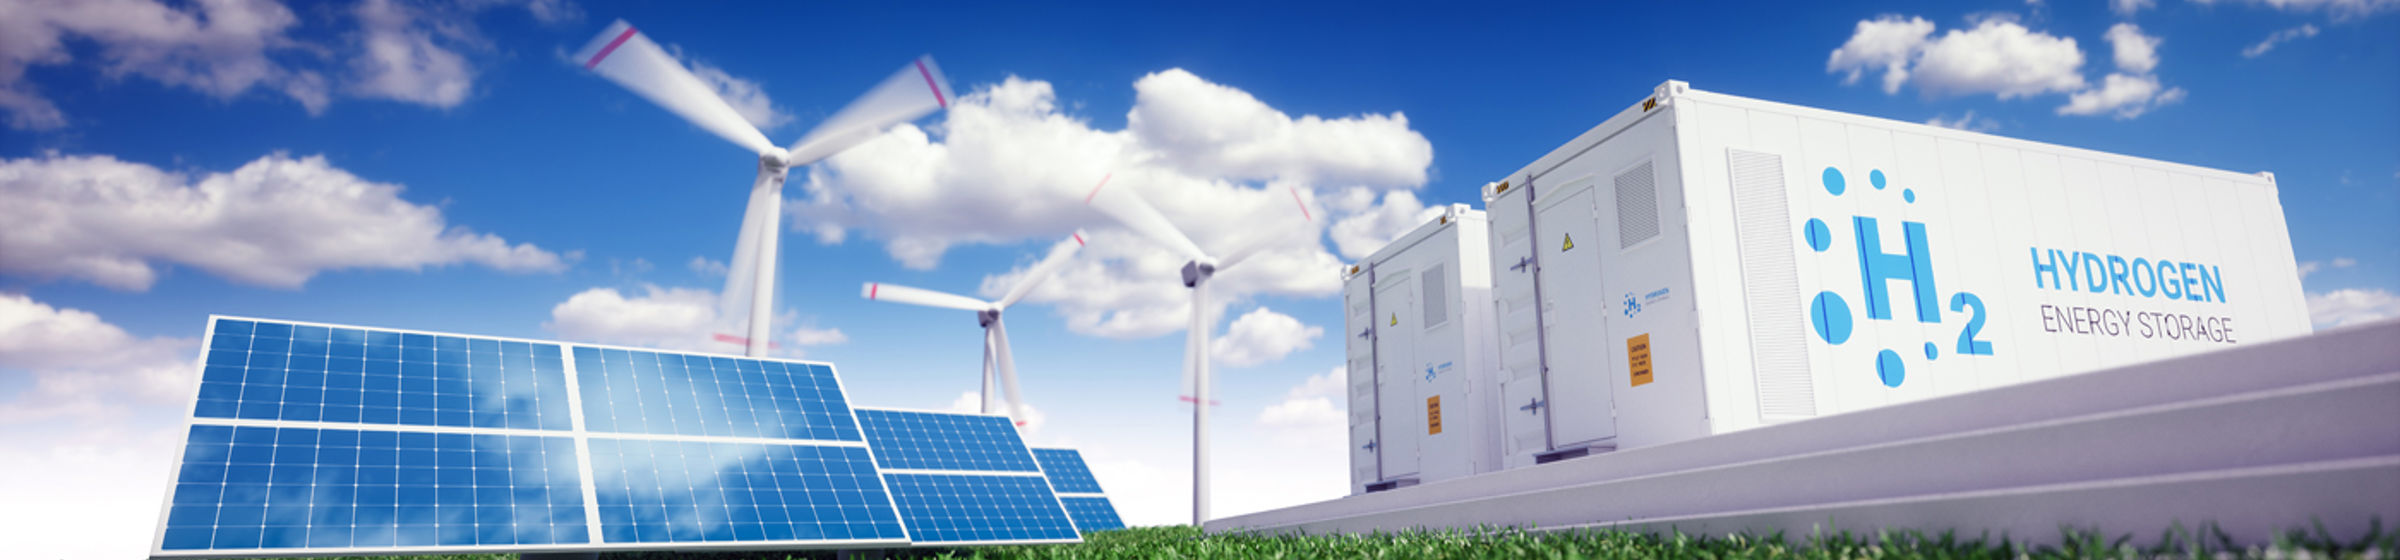 Hydrogen, wind turbines and solar cells